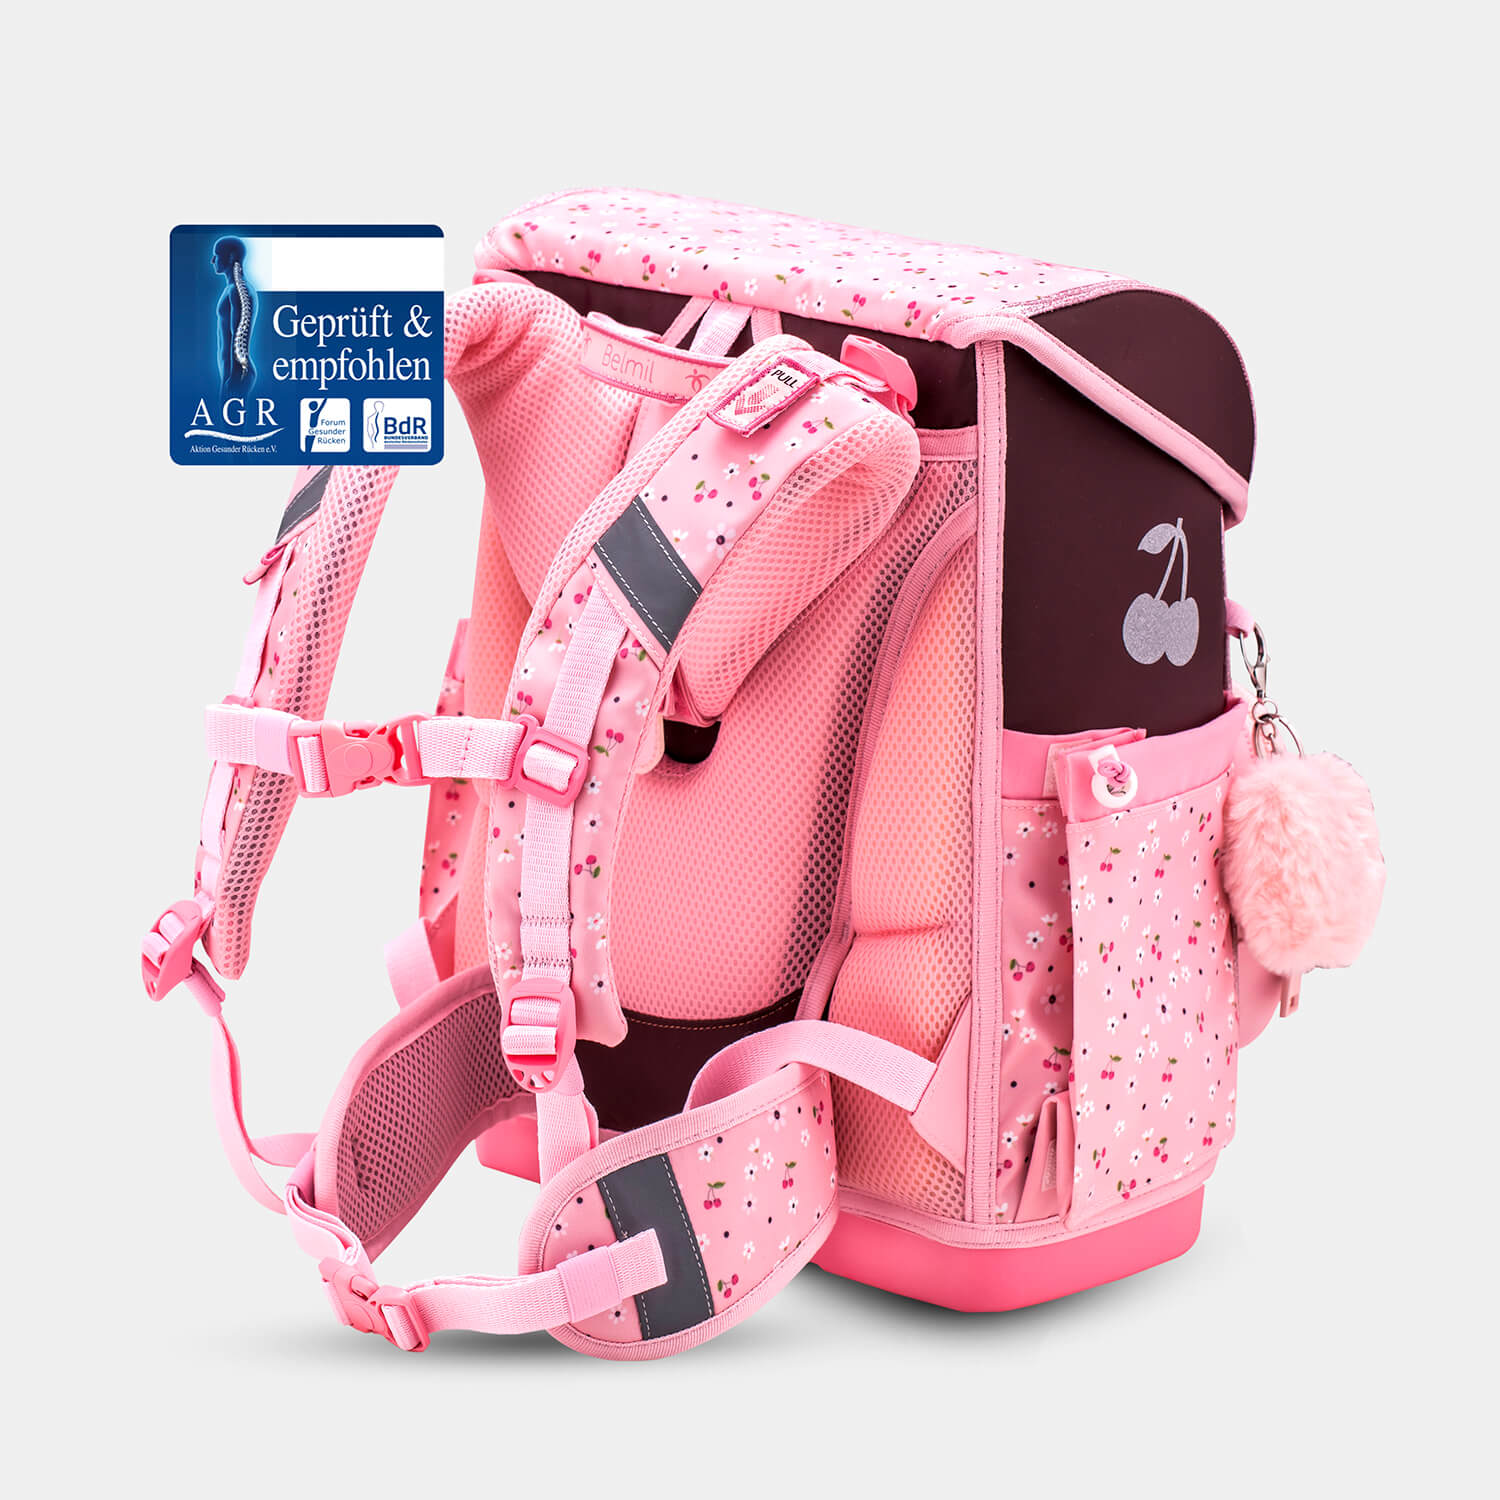 Compact Plus Cherry Blossom Schoolbag set 5pcs.